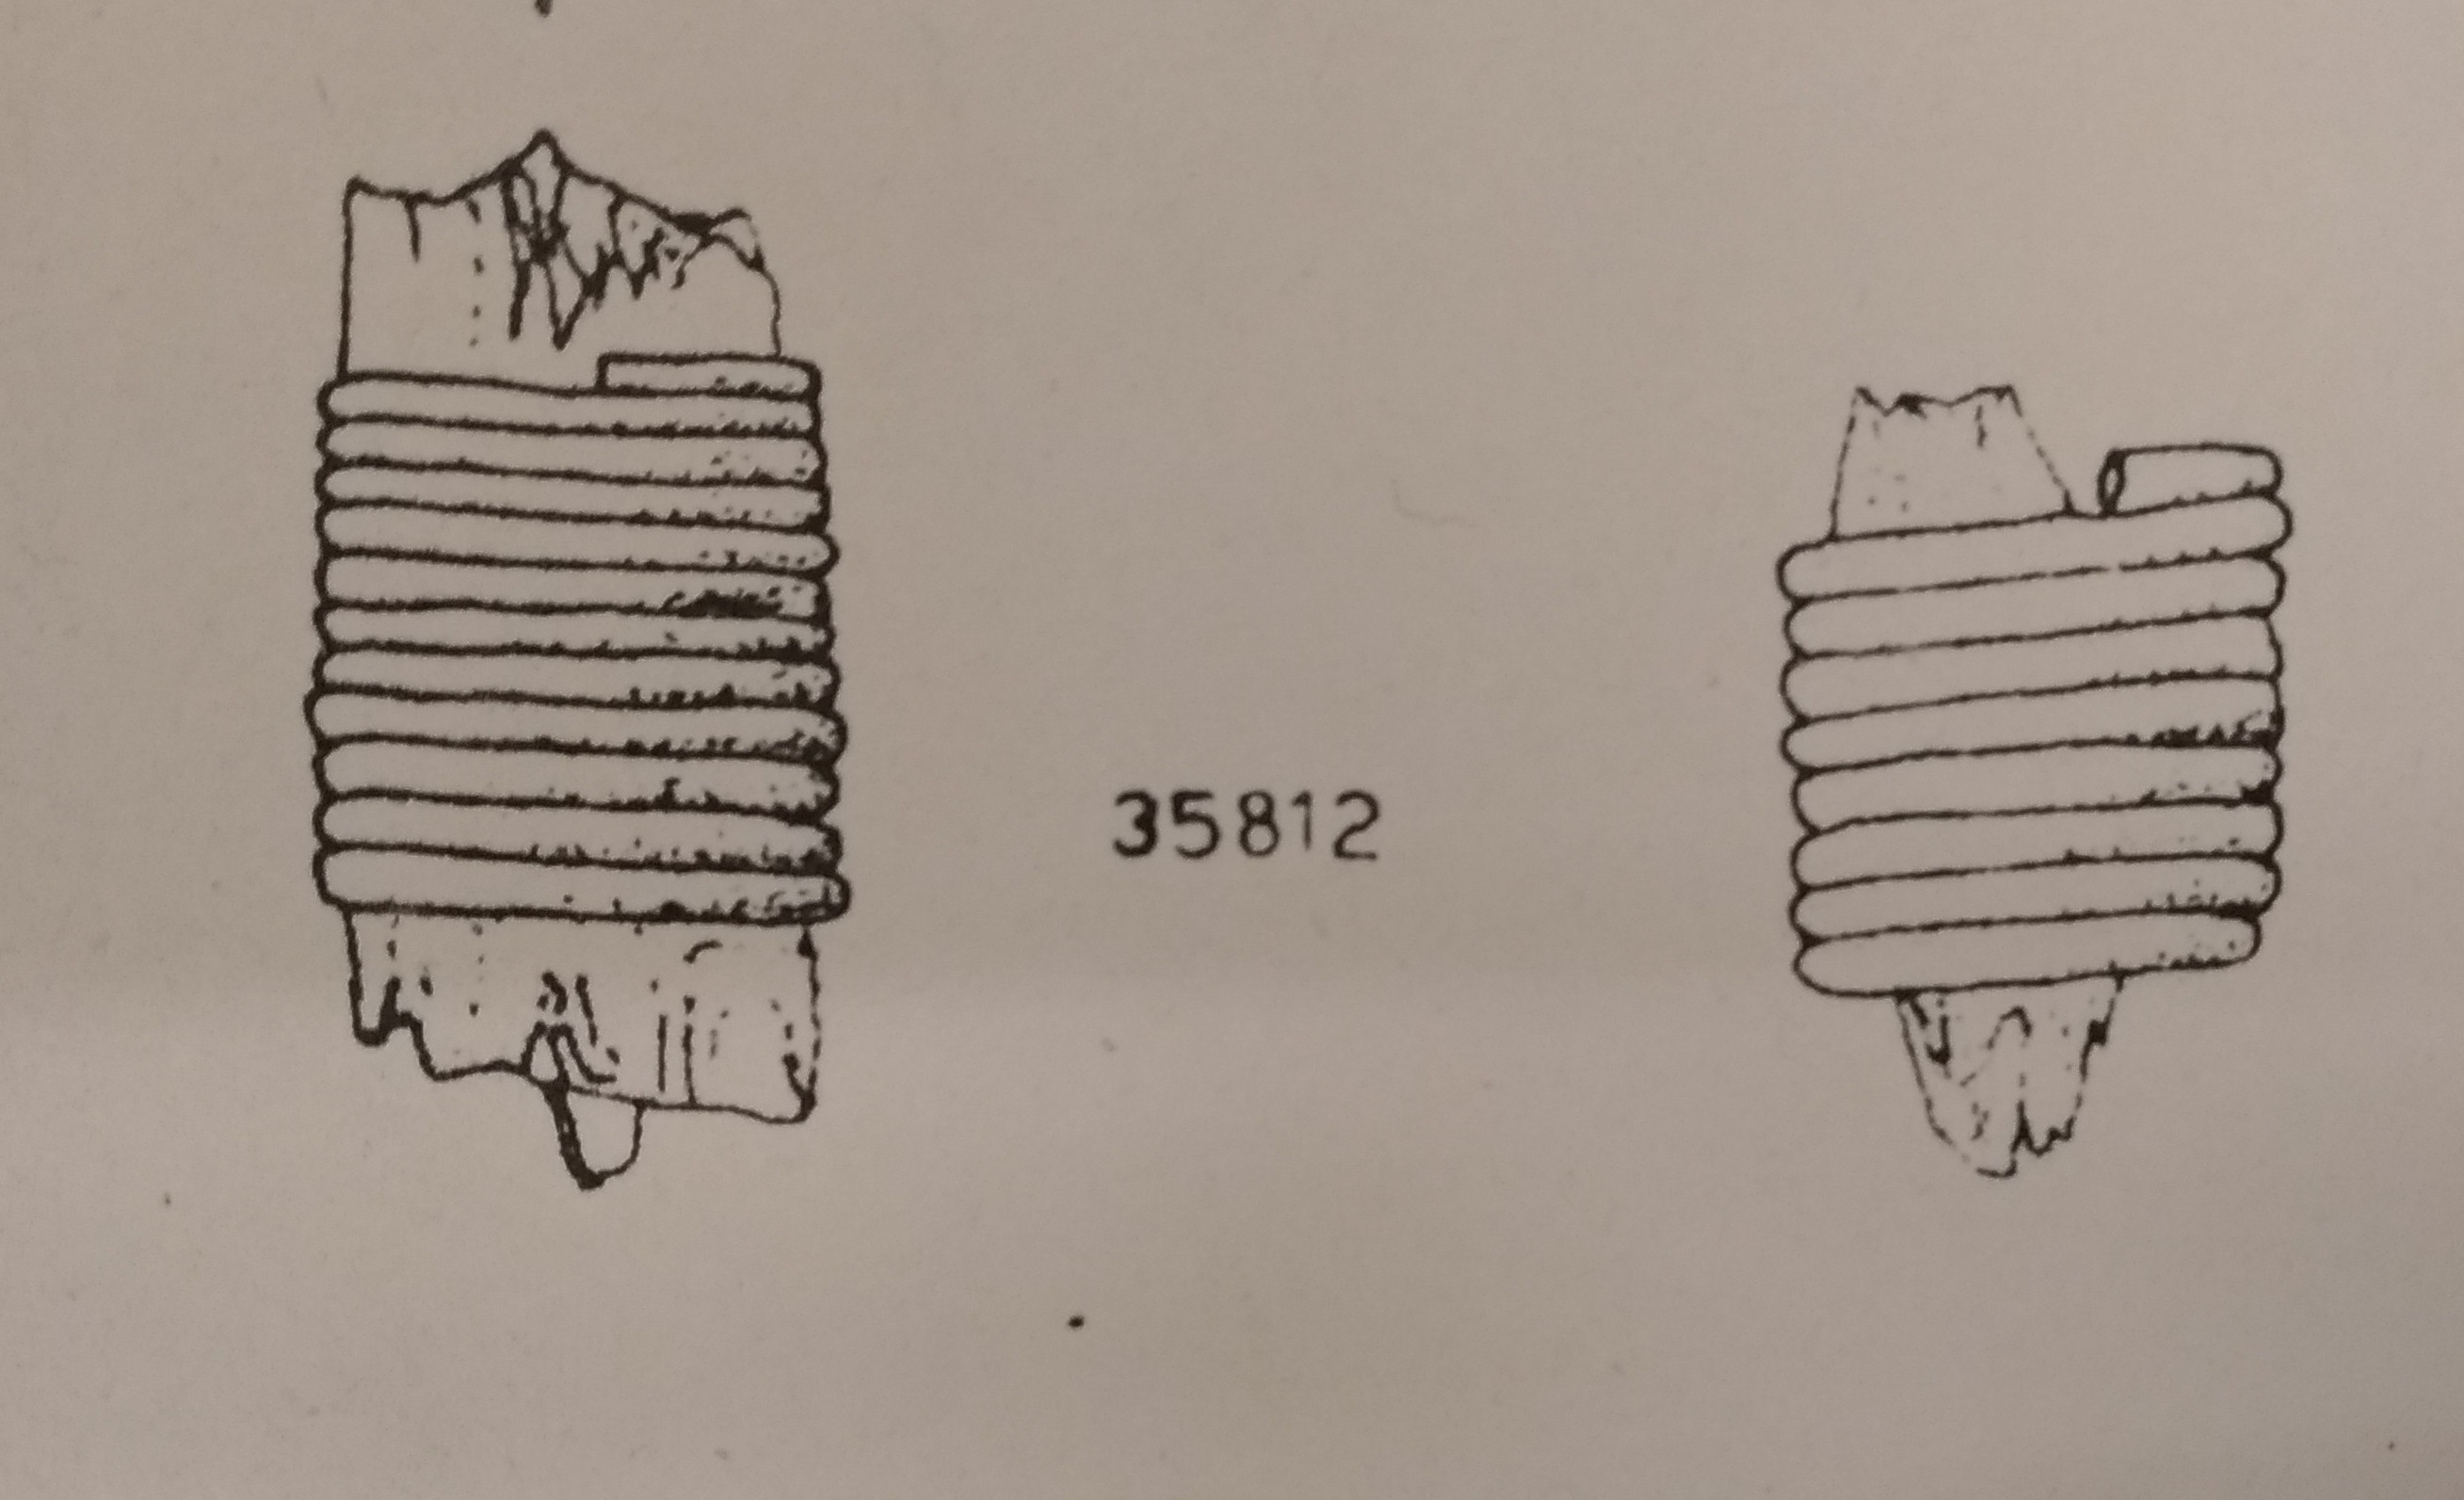 ASTA, rivestita di filo di bronzo (metà VIII a.C)